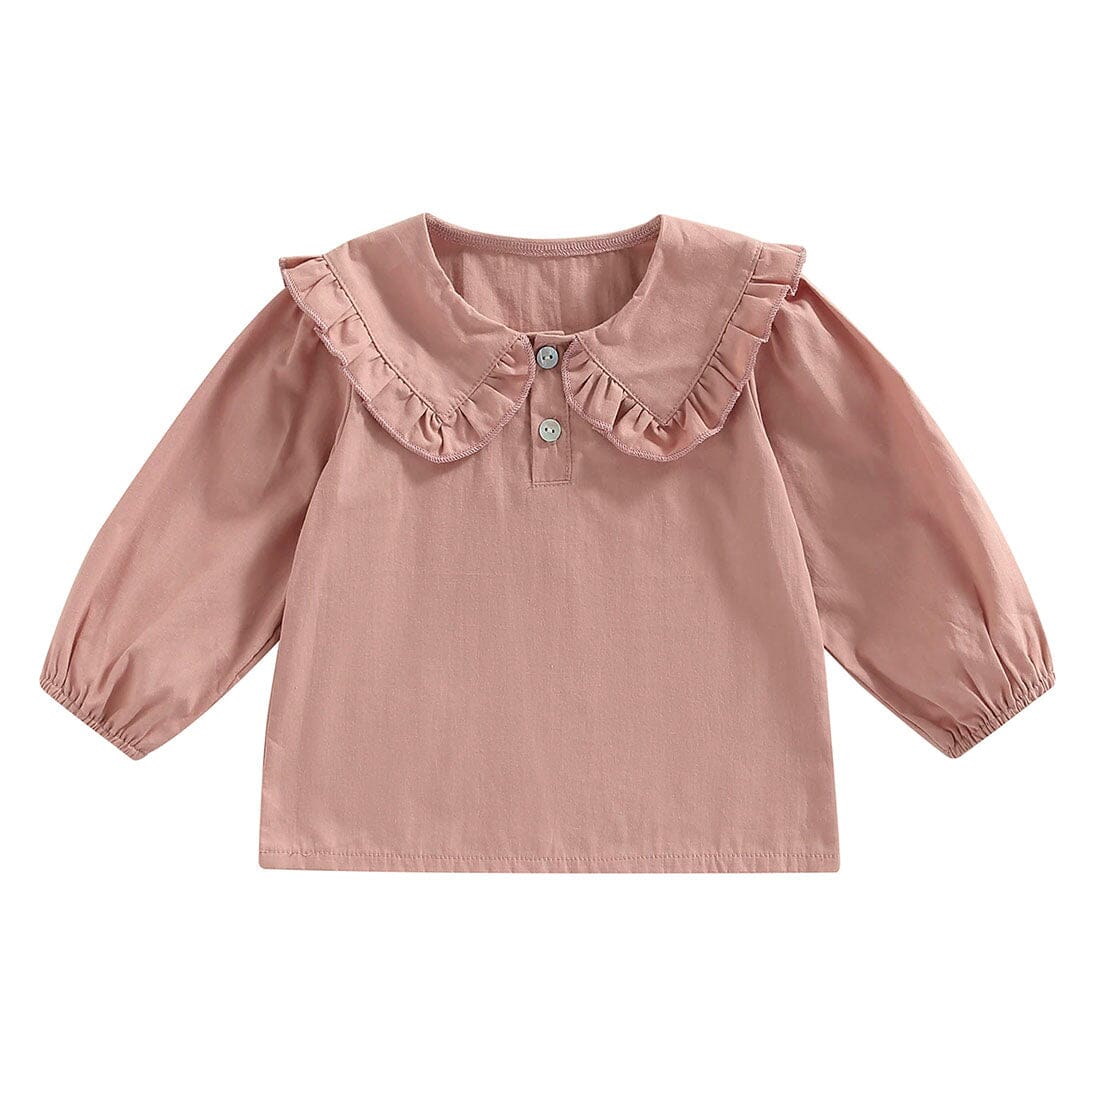 Solid Ruffled Collar Toddler Shirt Pink 9-12 M 